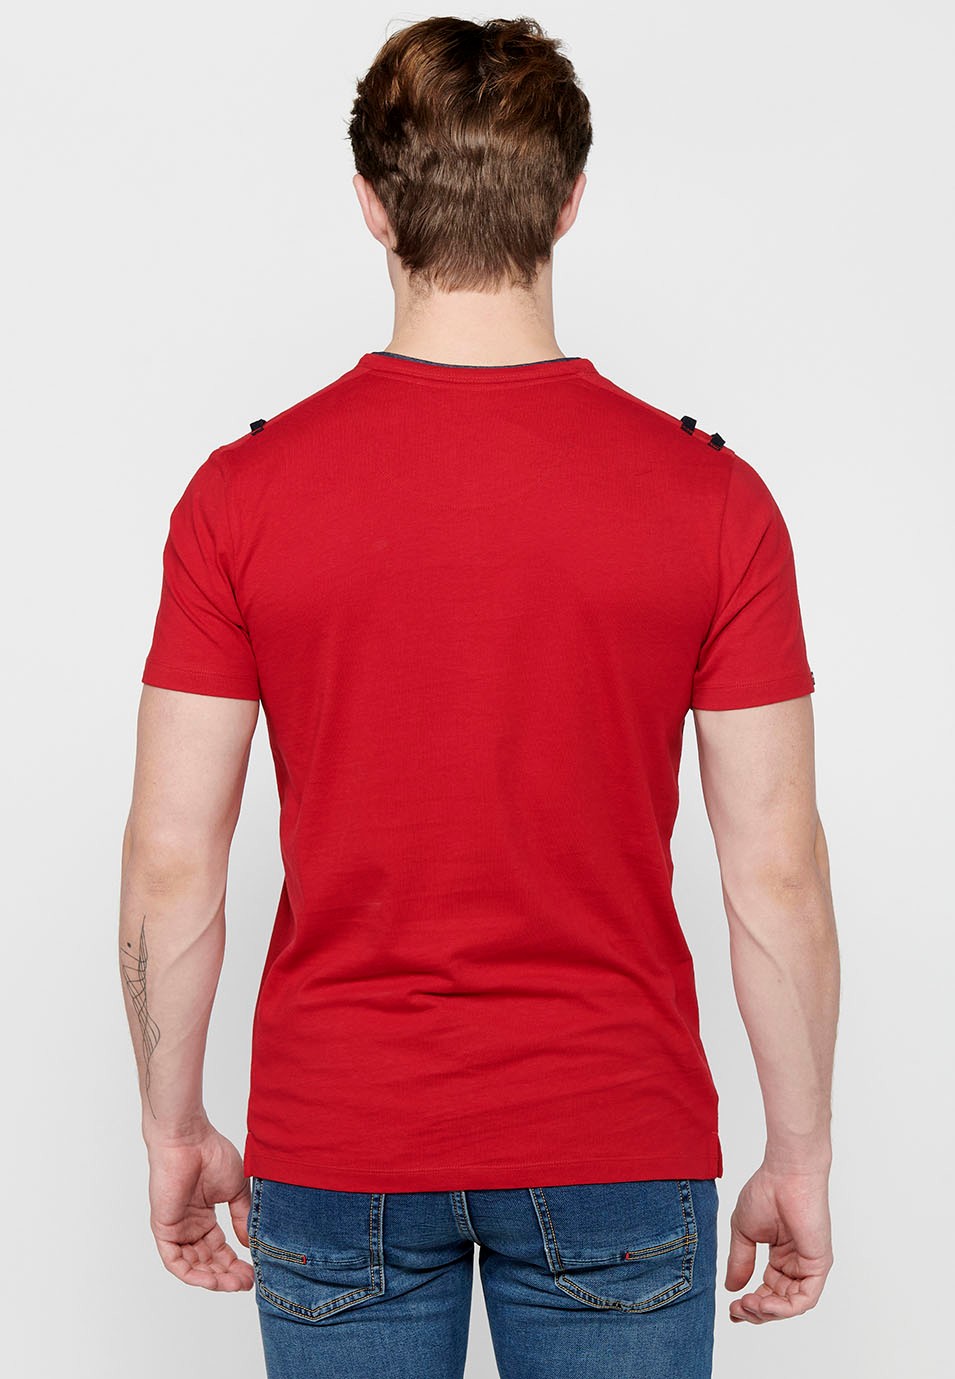 Camiseta de manga corta de Algodón con Cuello redondo con abertura abotonada de Color Rojo para Hombre 2